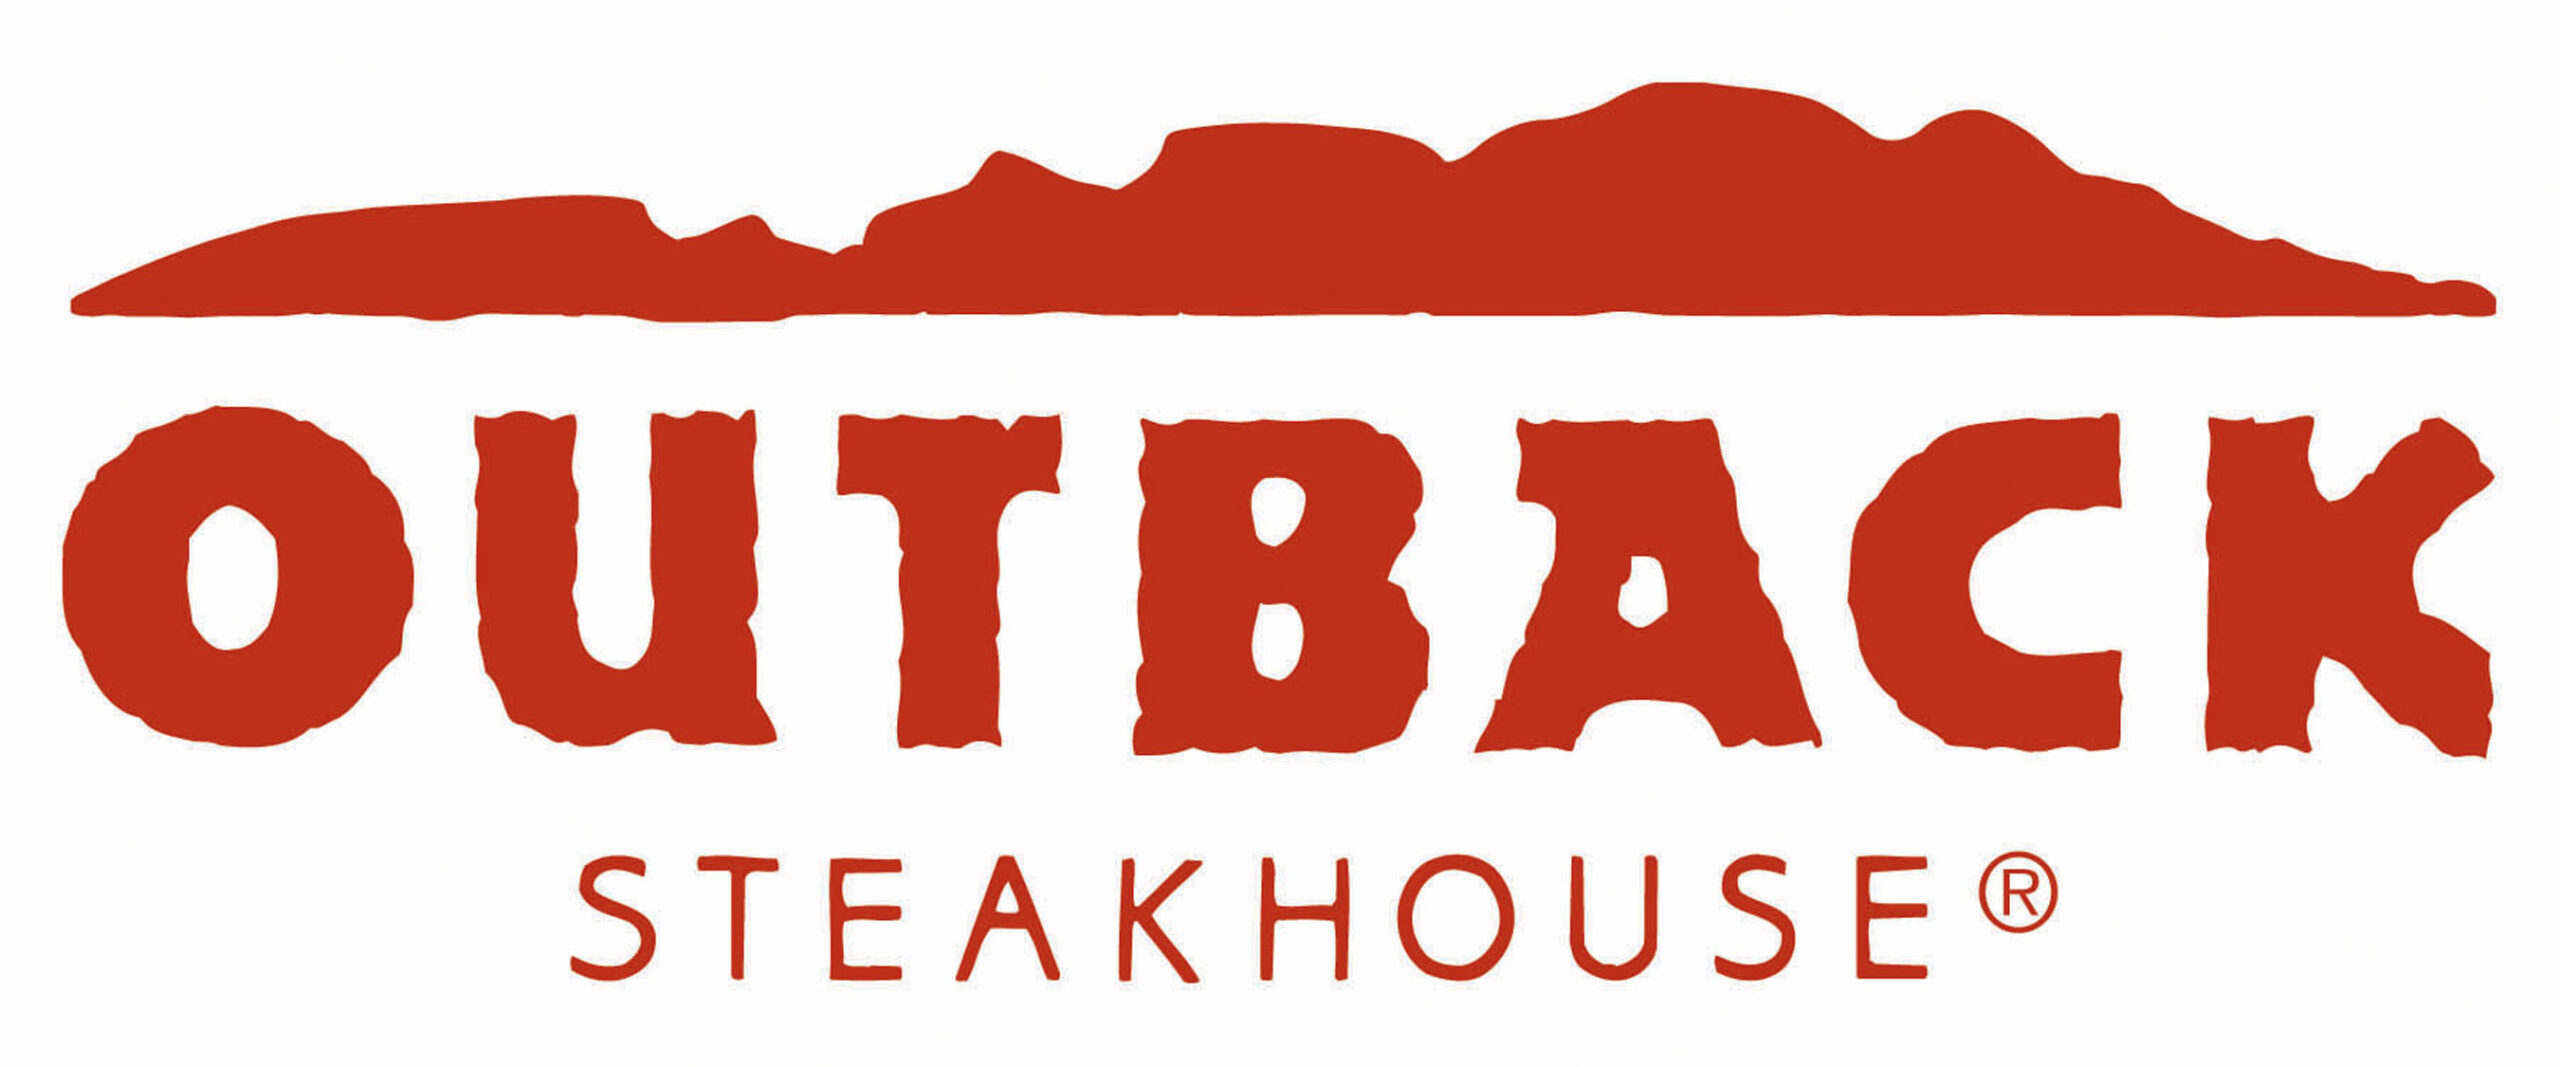 logo for Outback Steakhouse